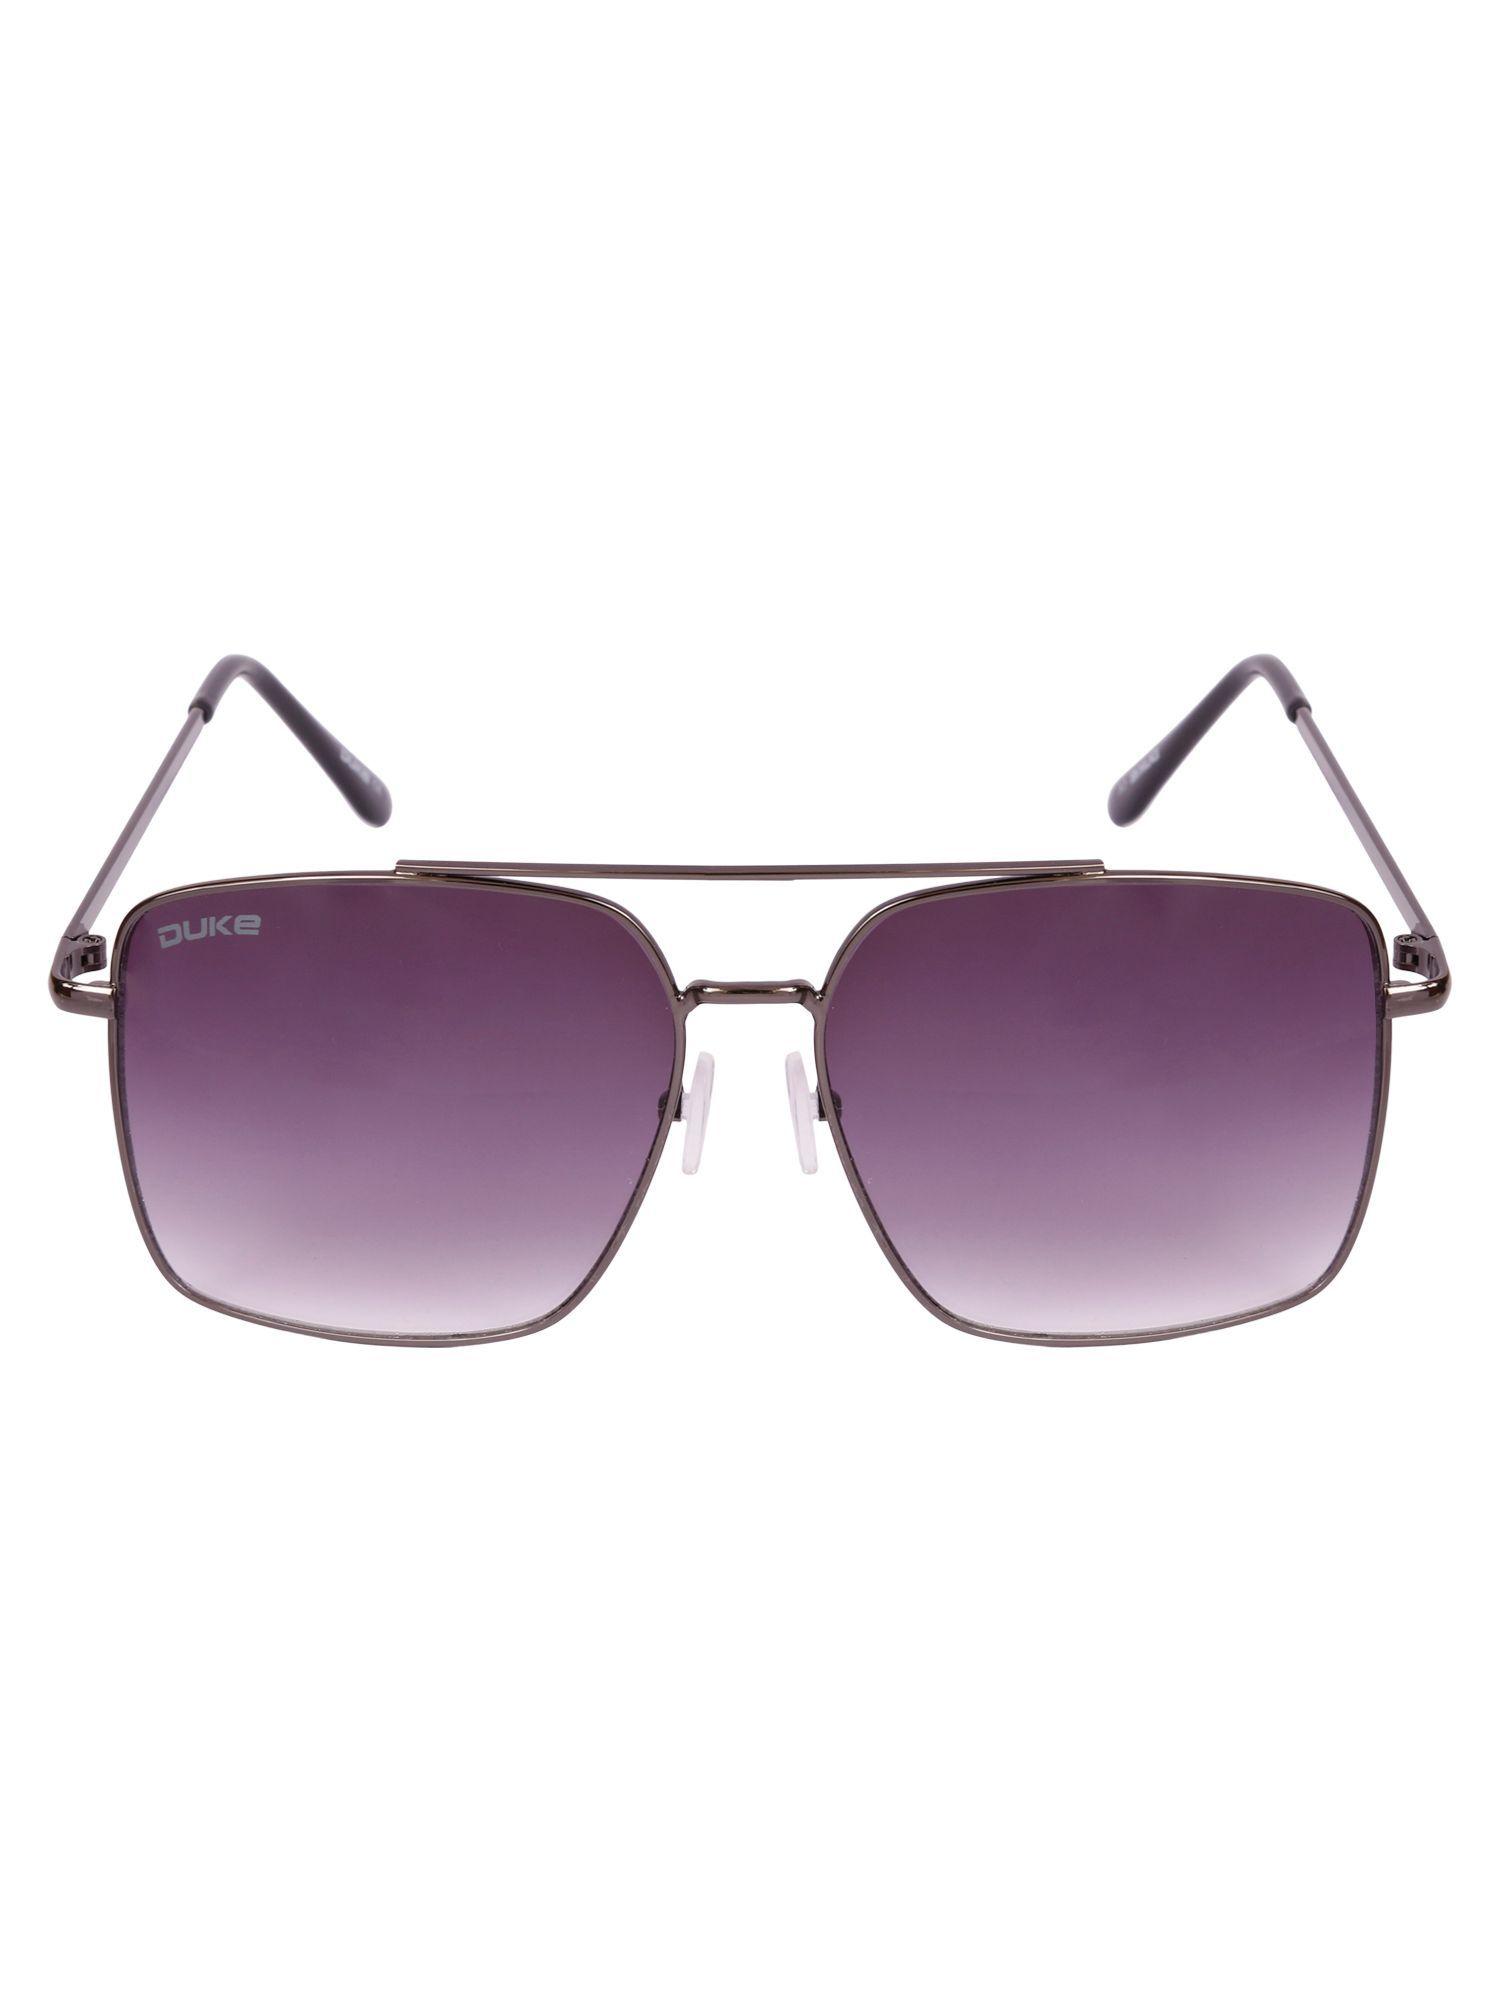 polycarbonate-uv-400-women-square-sunglasses--duke-a1869-c10